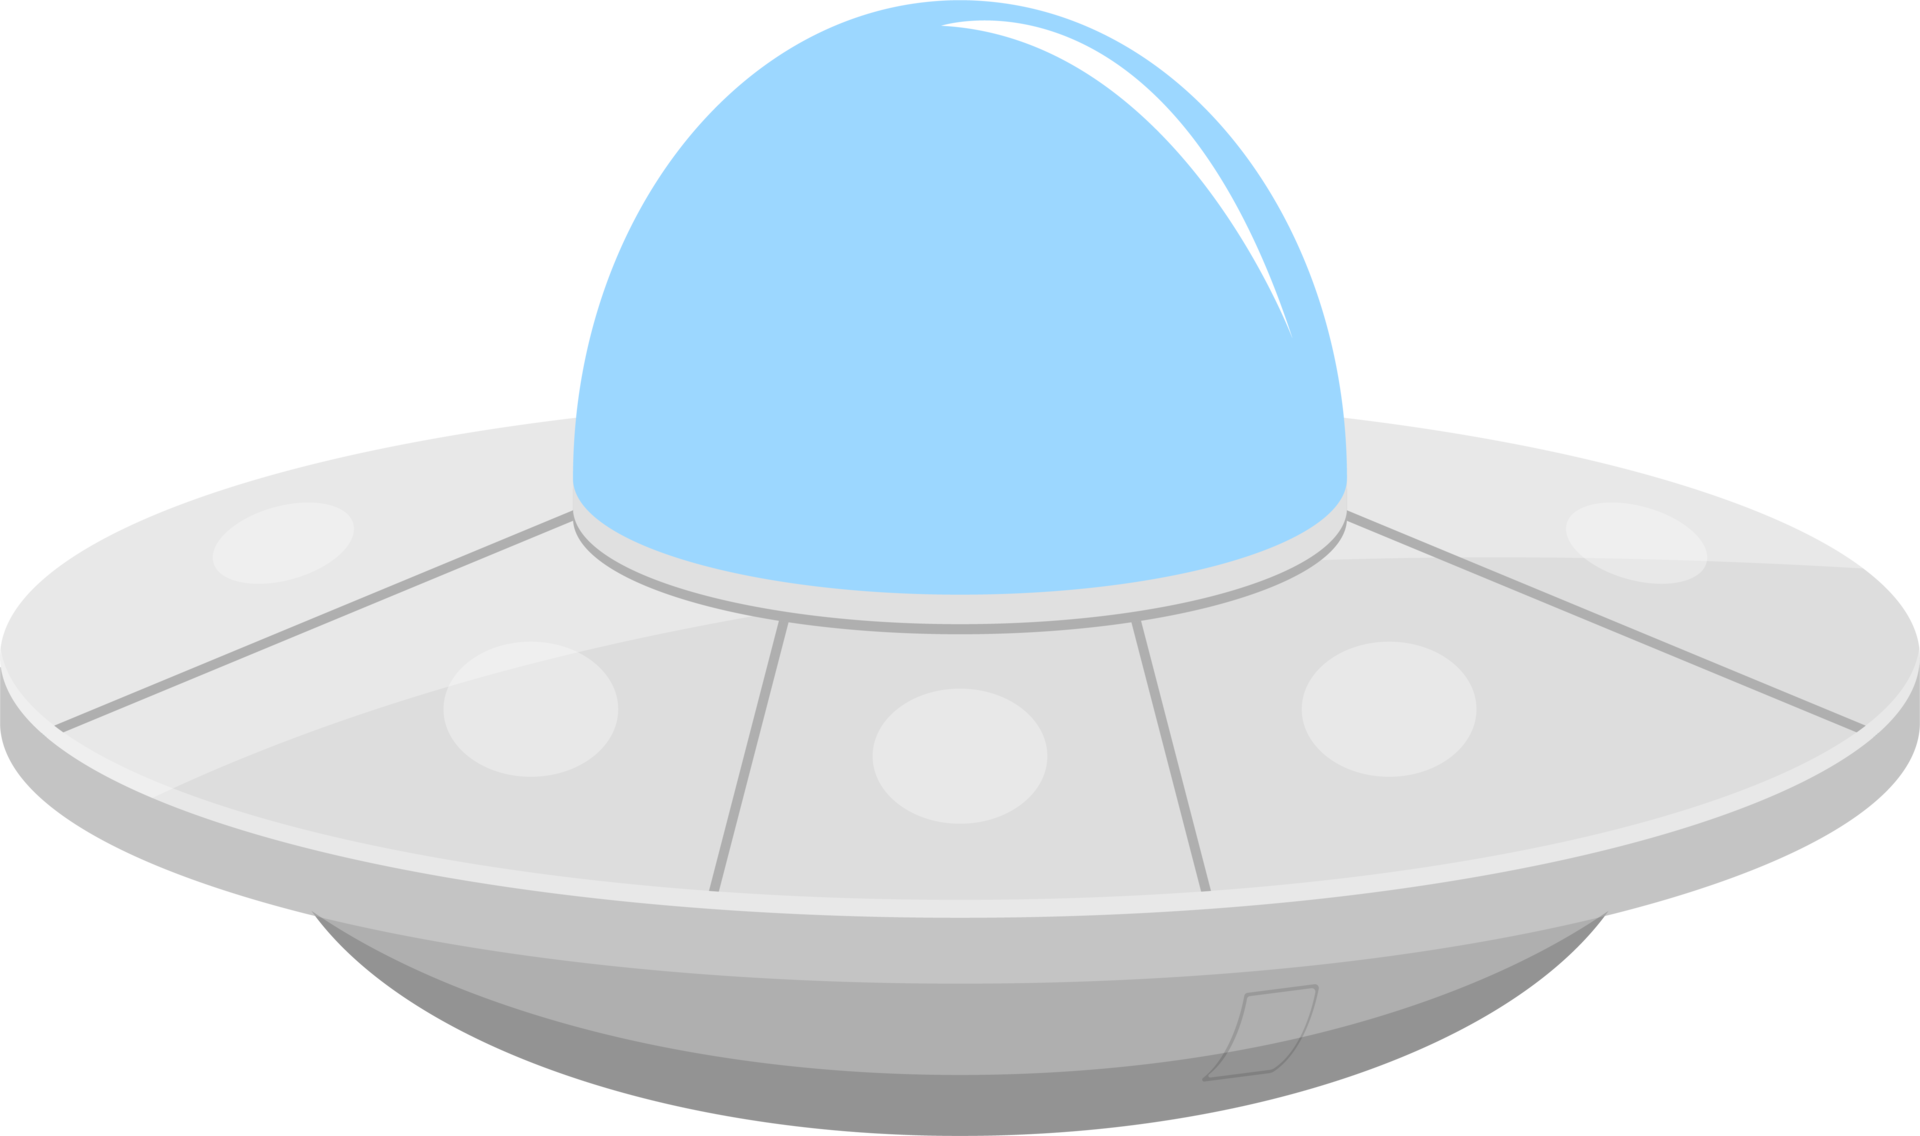 Ufo Spaceship Concept Clipart Design Illustration 9356452 Png